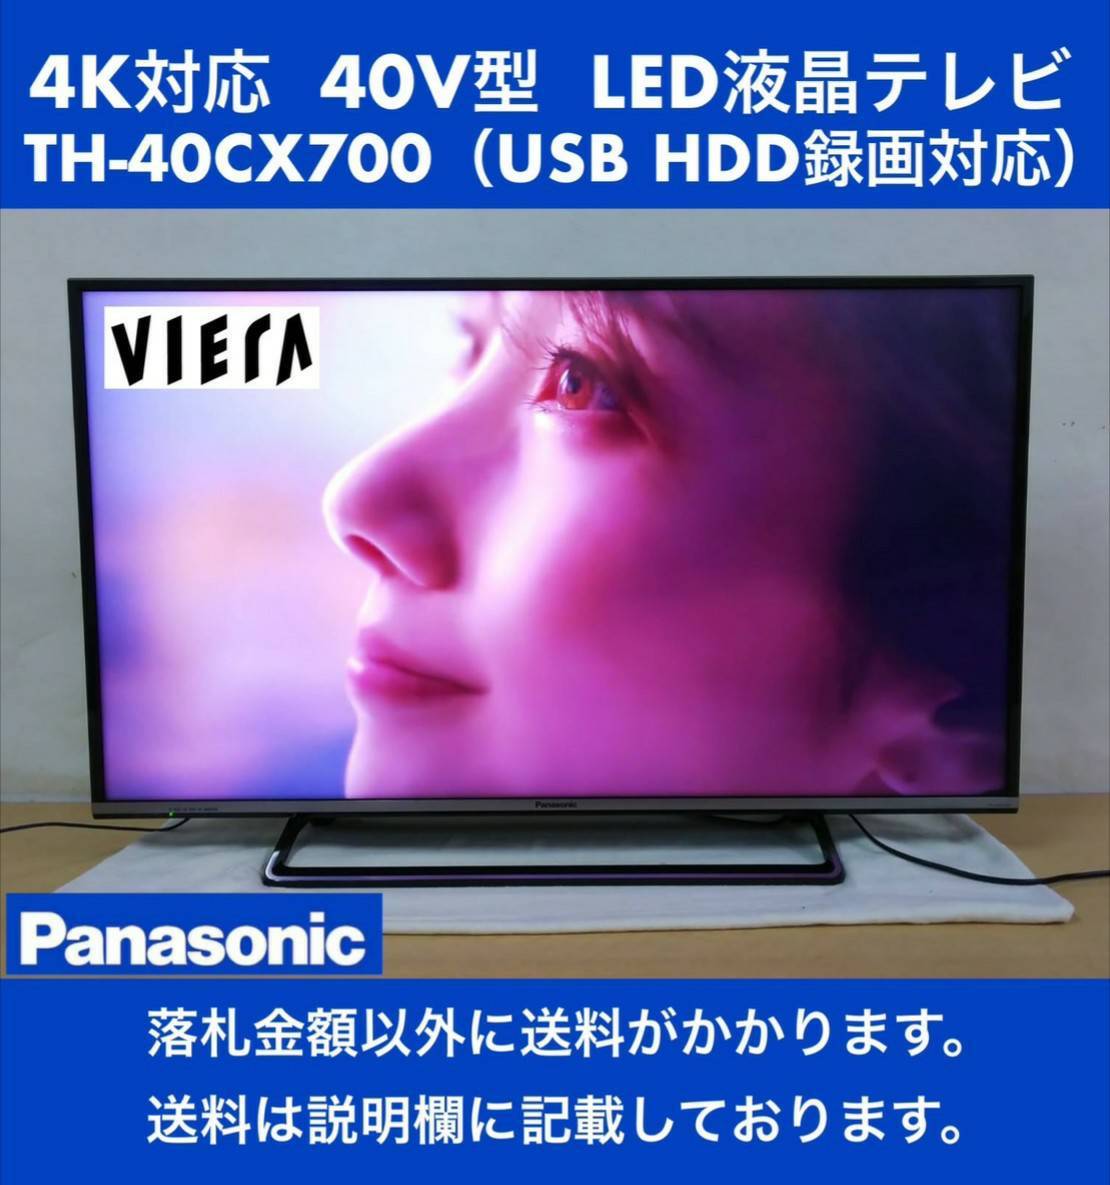 美品 Panasonic VIERA 地上・BS・110度CSデジタルハイビジョン40V型LED